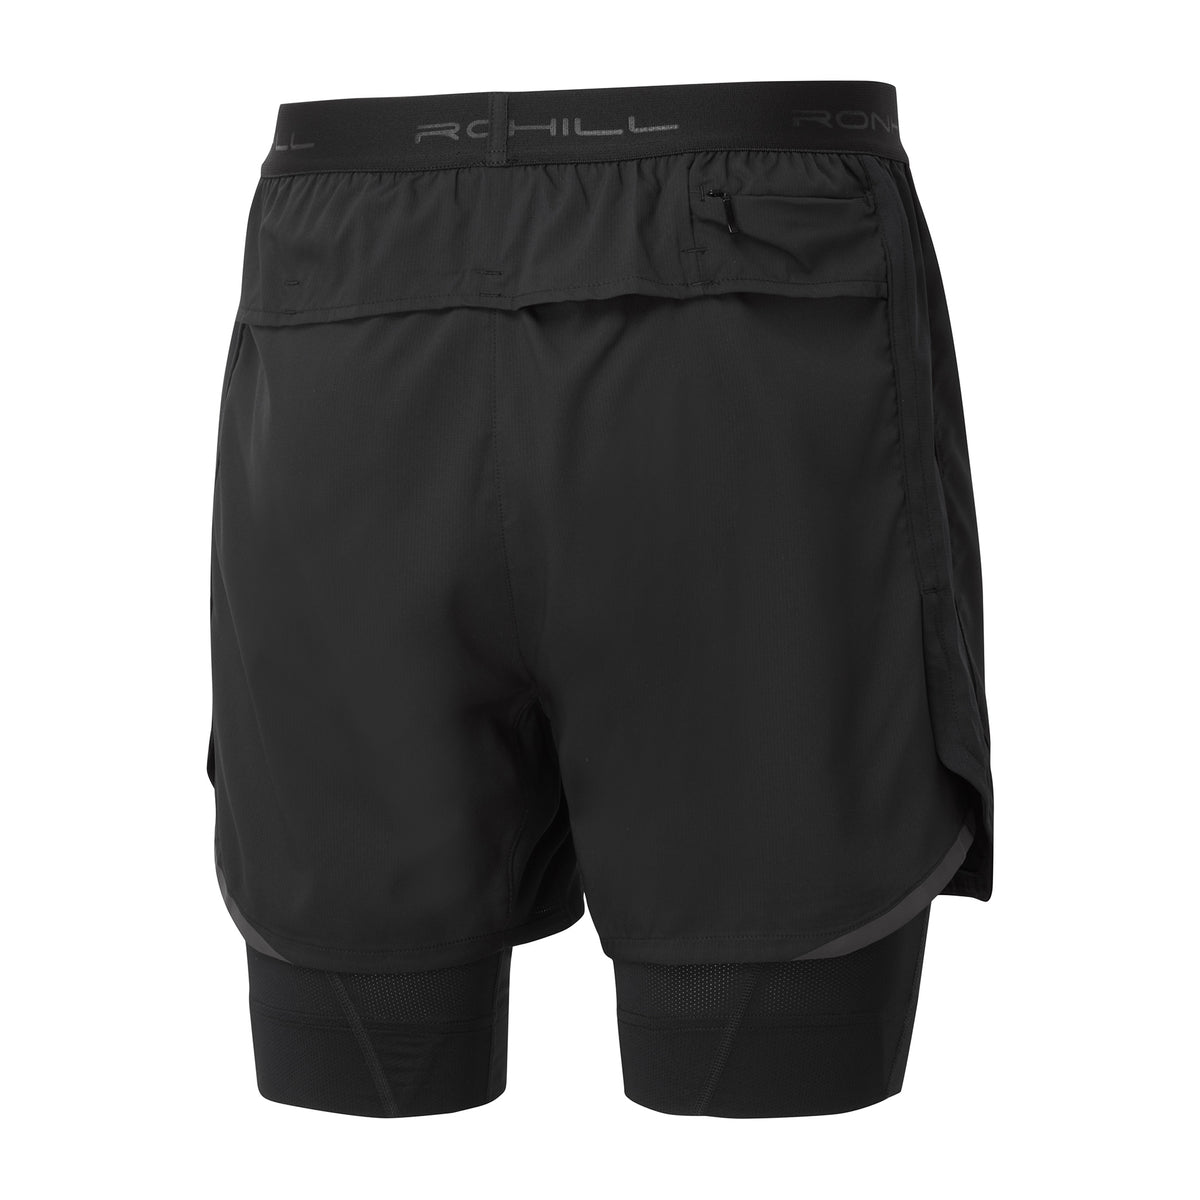 Ronhill Mens Tech Revive 5 inch Twin Shorts: Black